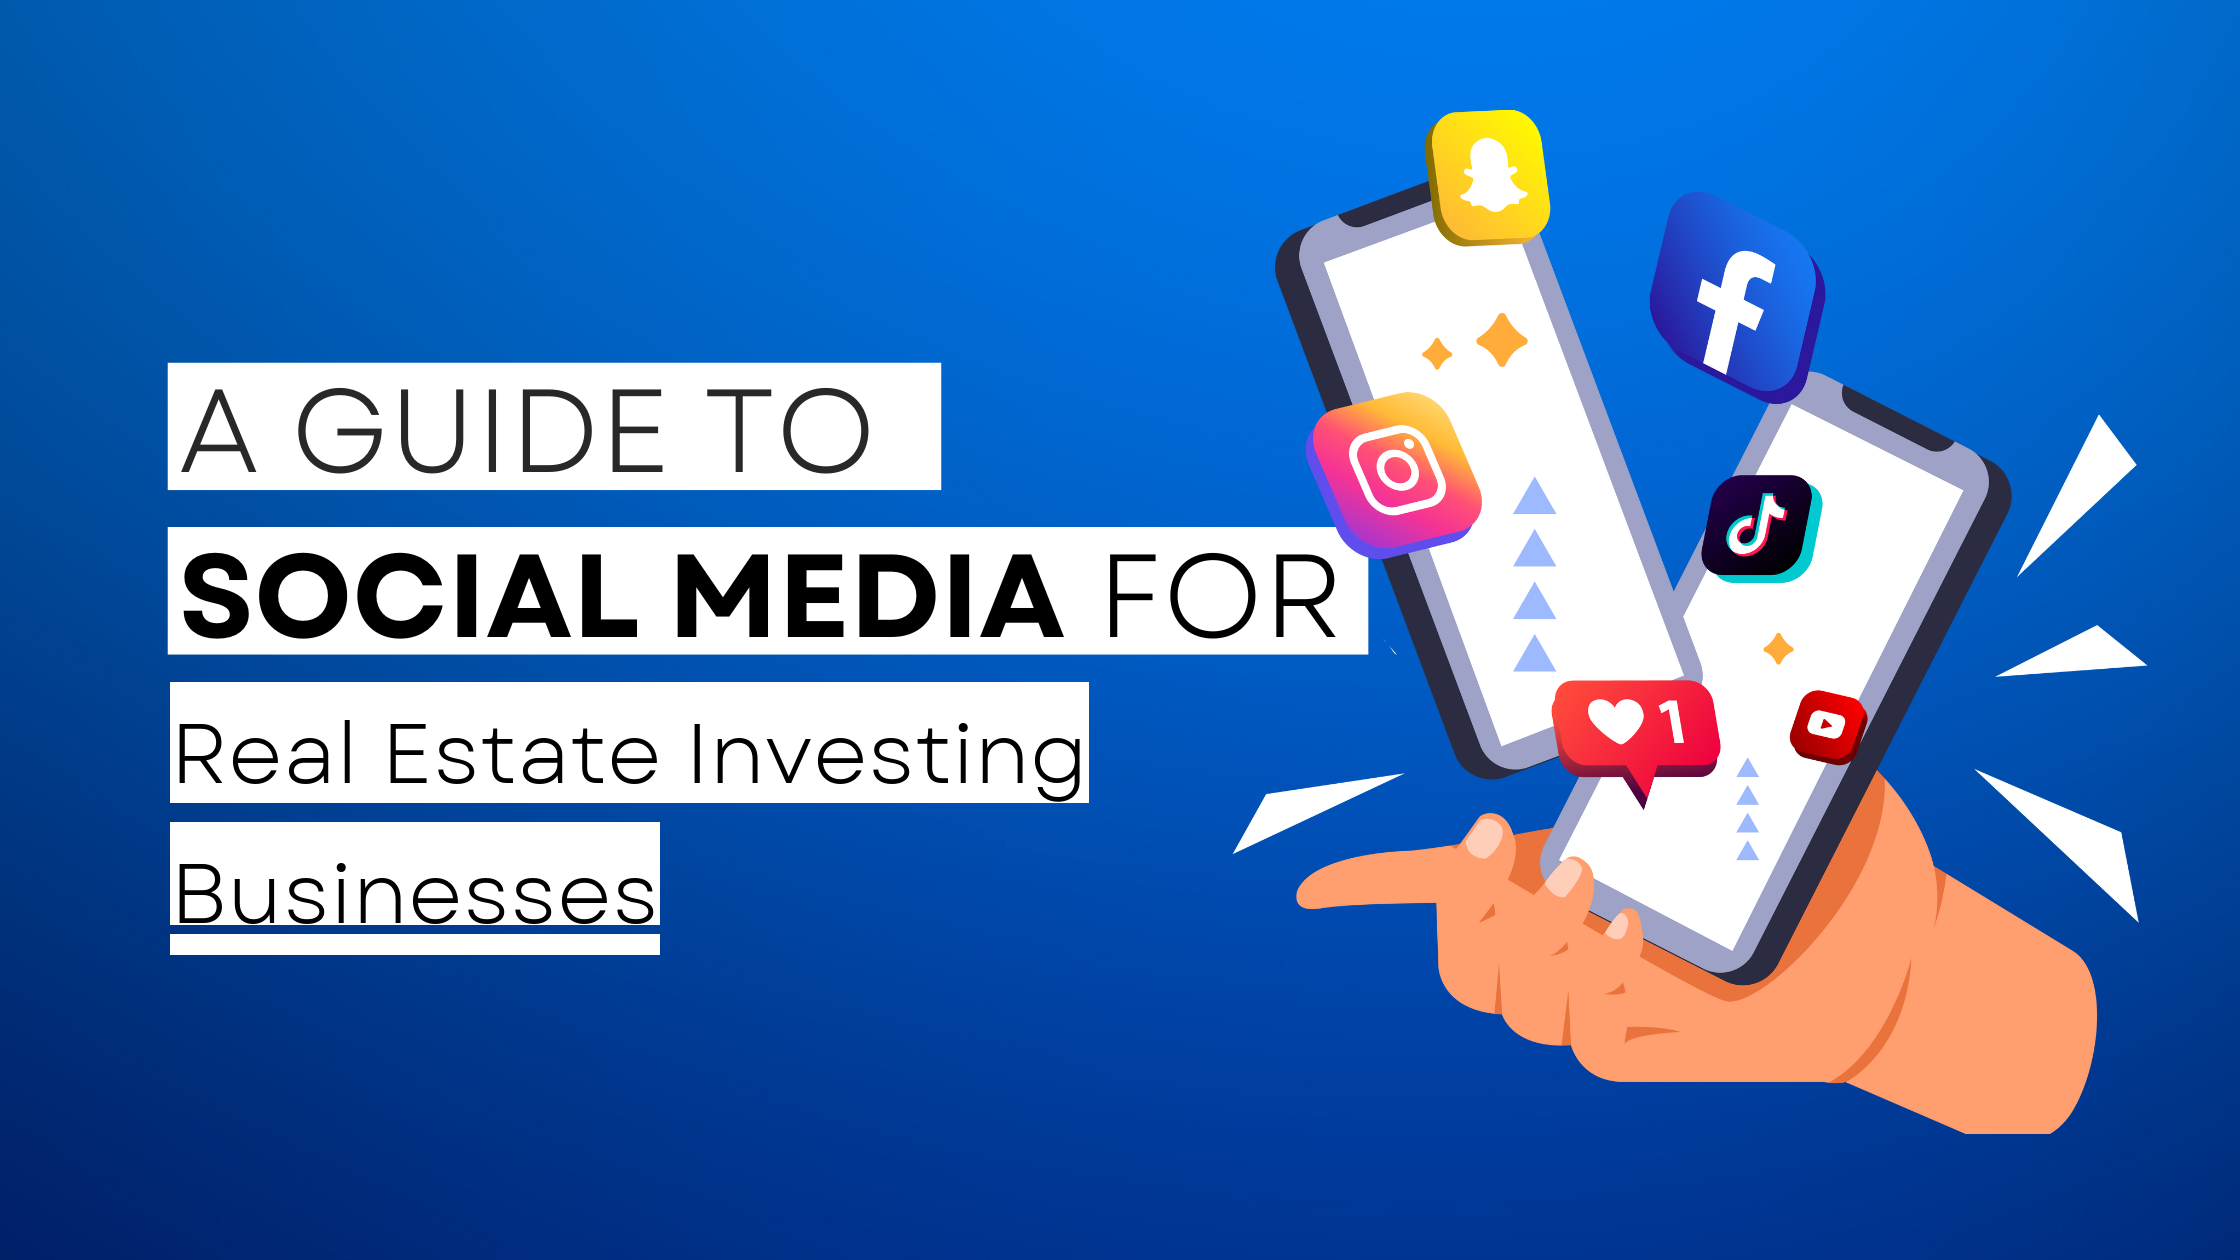 How to start Real Estate Investing on social media